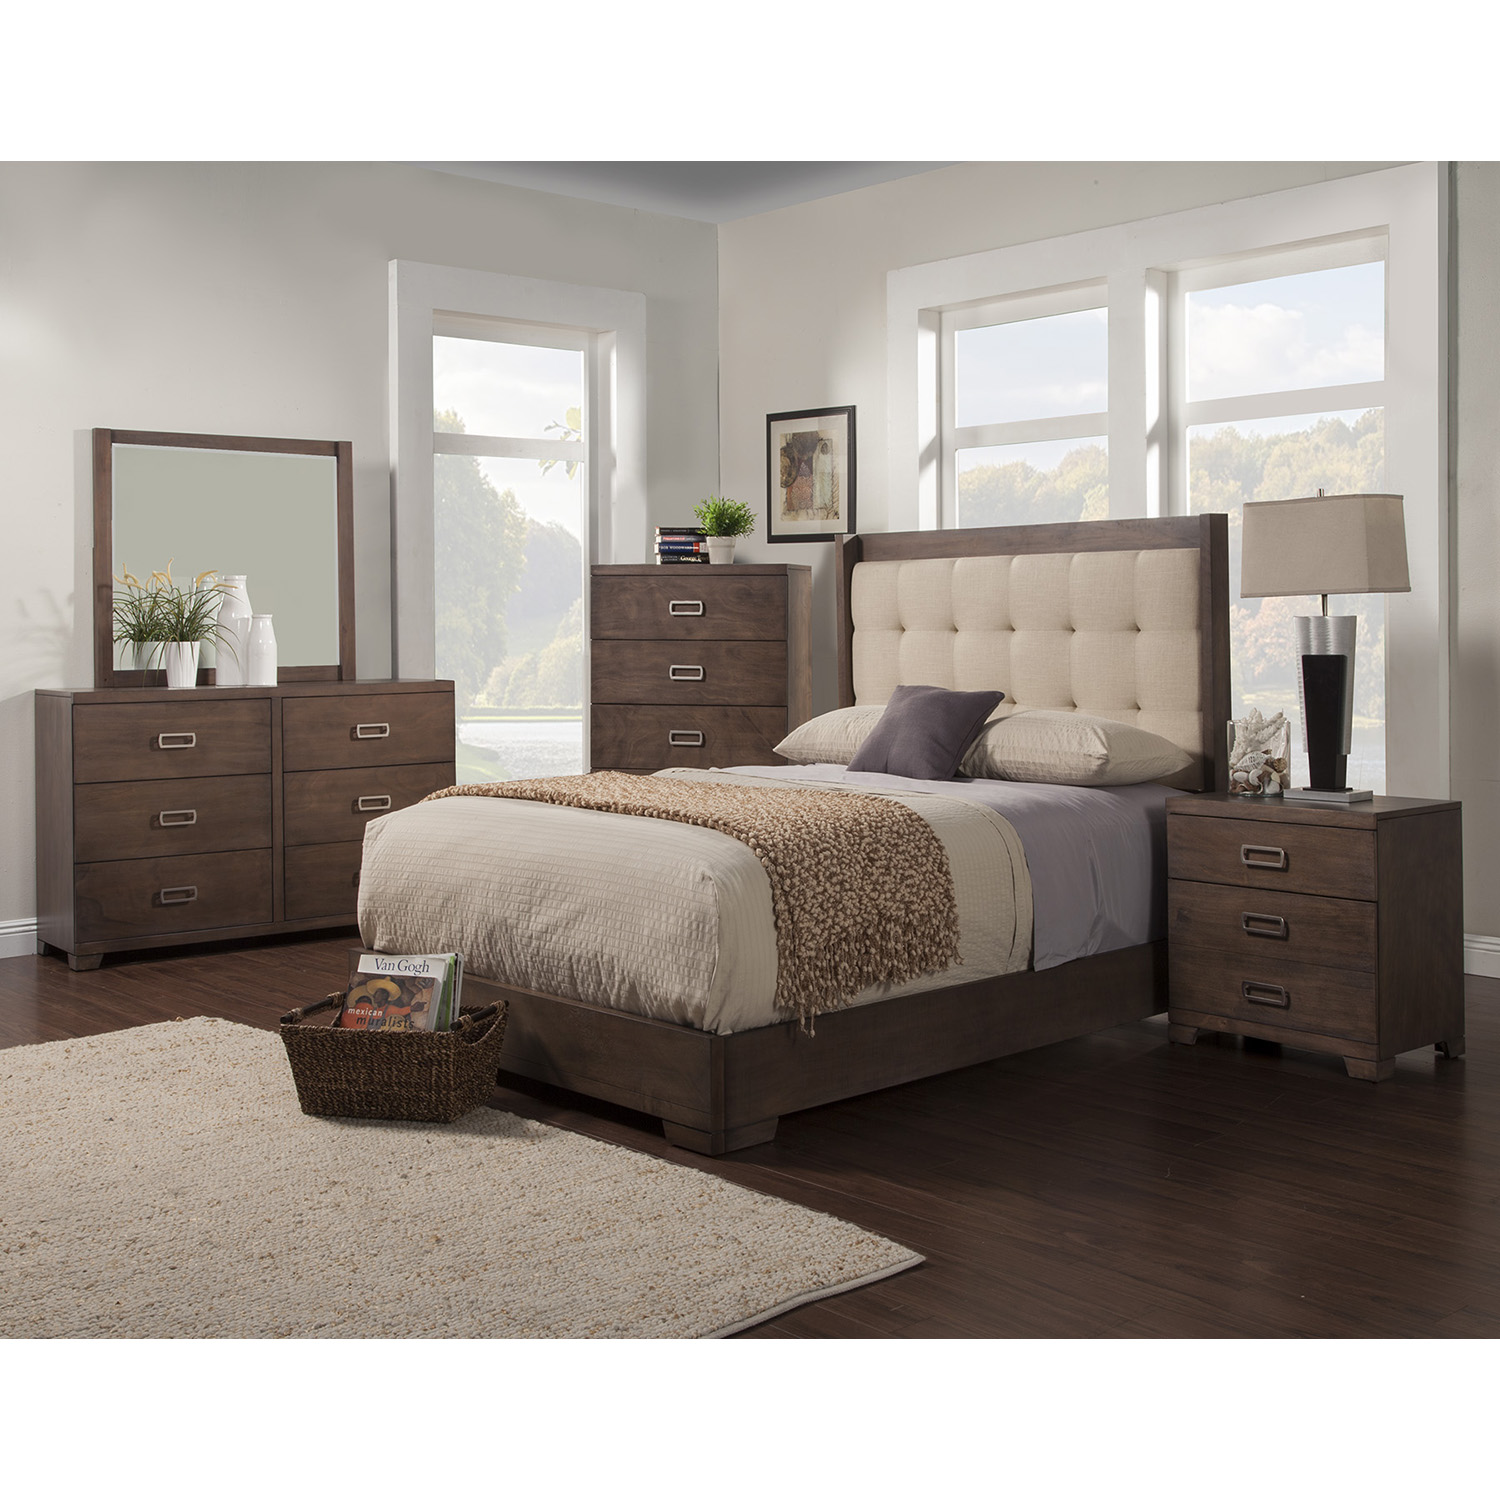 Savannah Bedroom Set - Pecan | DCG Stores